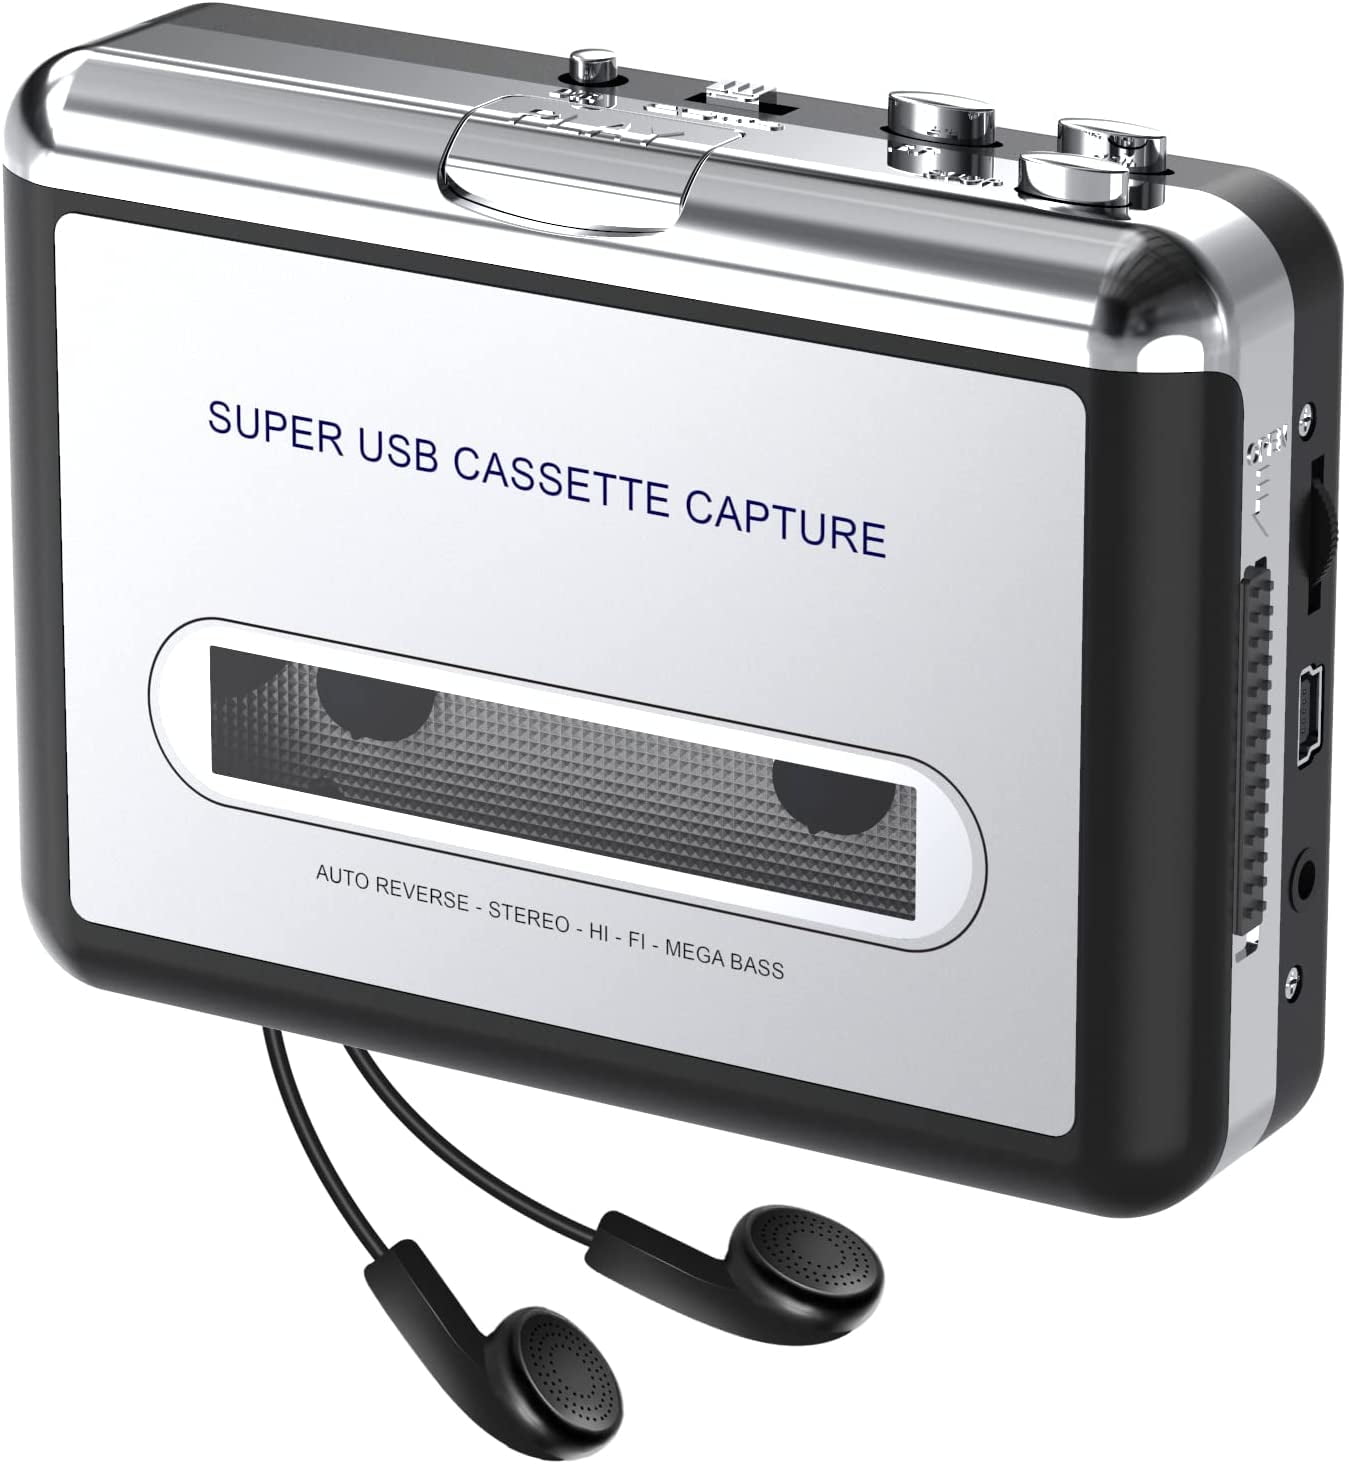 DIGITNOW Portable USB Cassette Tape Player Capture MP3 Audio Compatible With Laptop and Personal Computer, Convert Walkman Tape Cassette To MP3 Format - Walmart.com